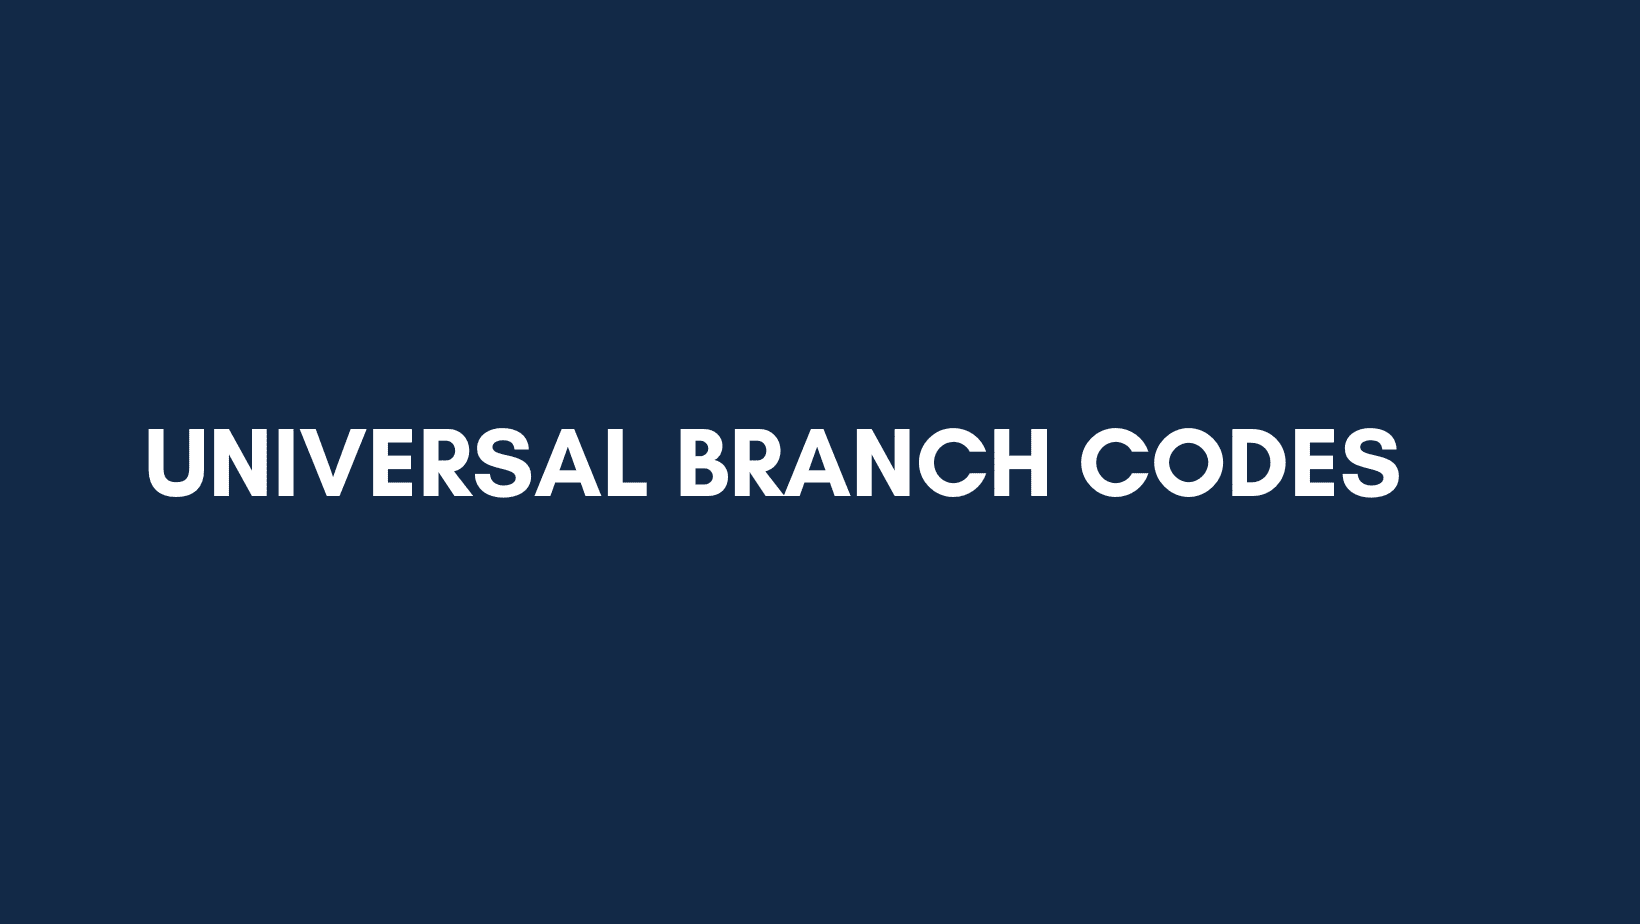 Universal branch codes